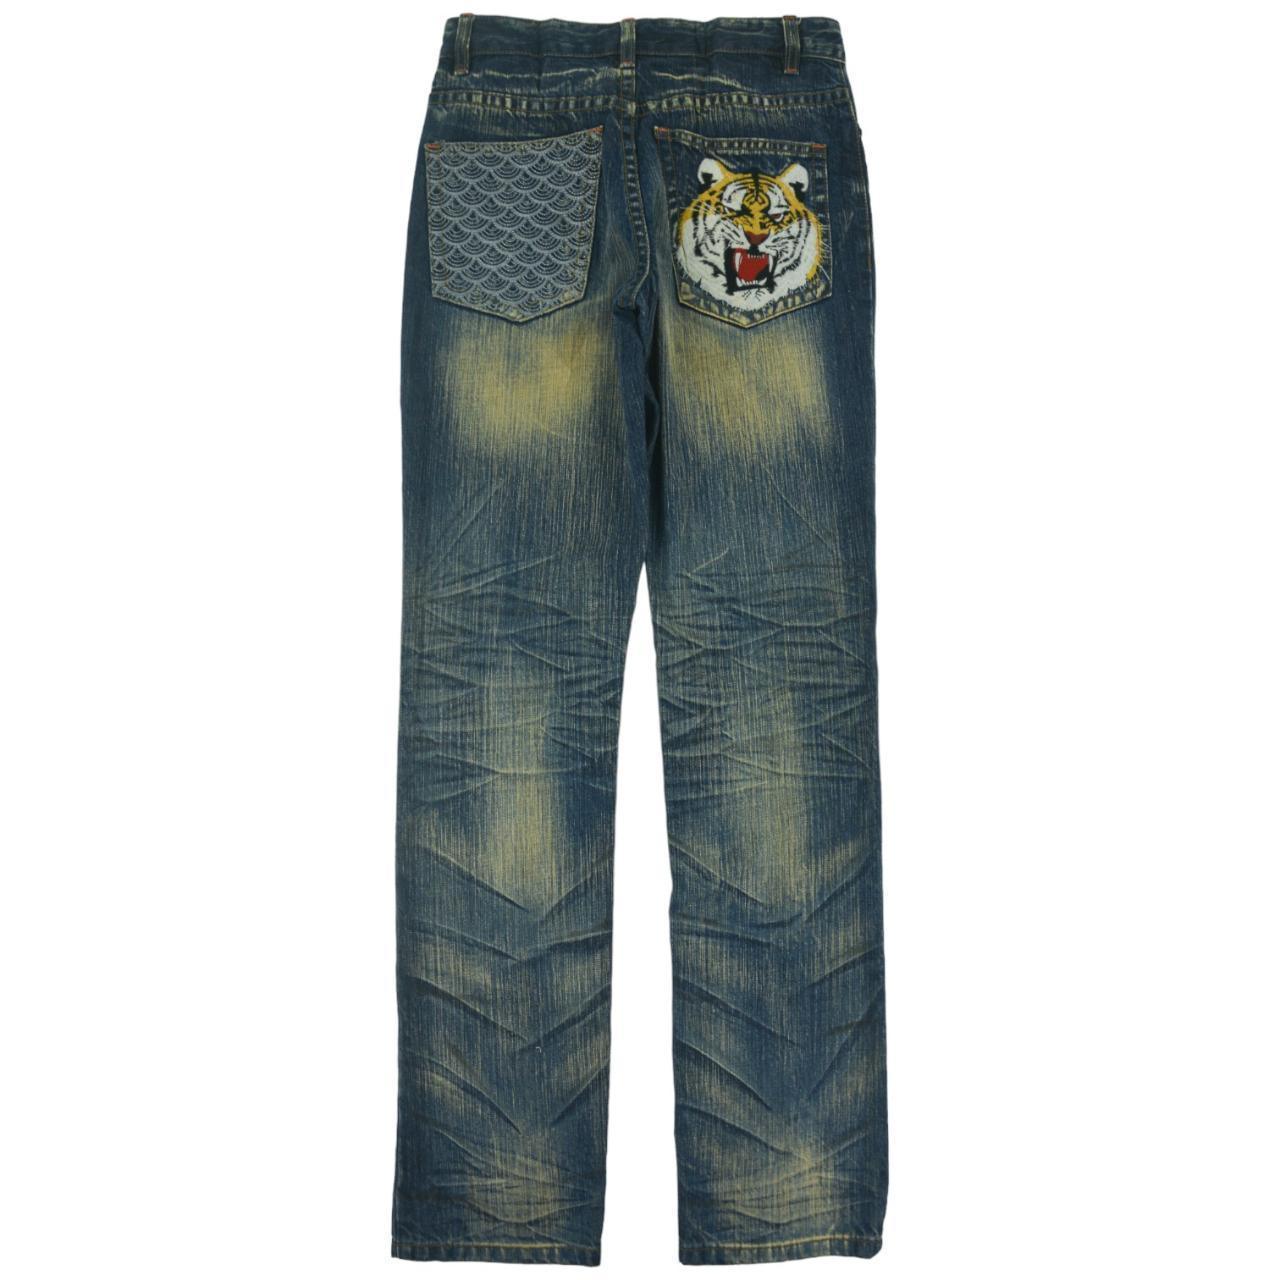 Vintage Tiger Denim Jeans Size W29 - Known Source